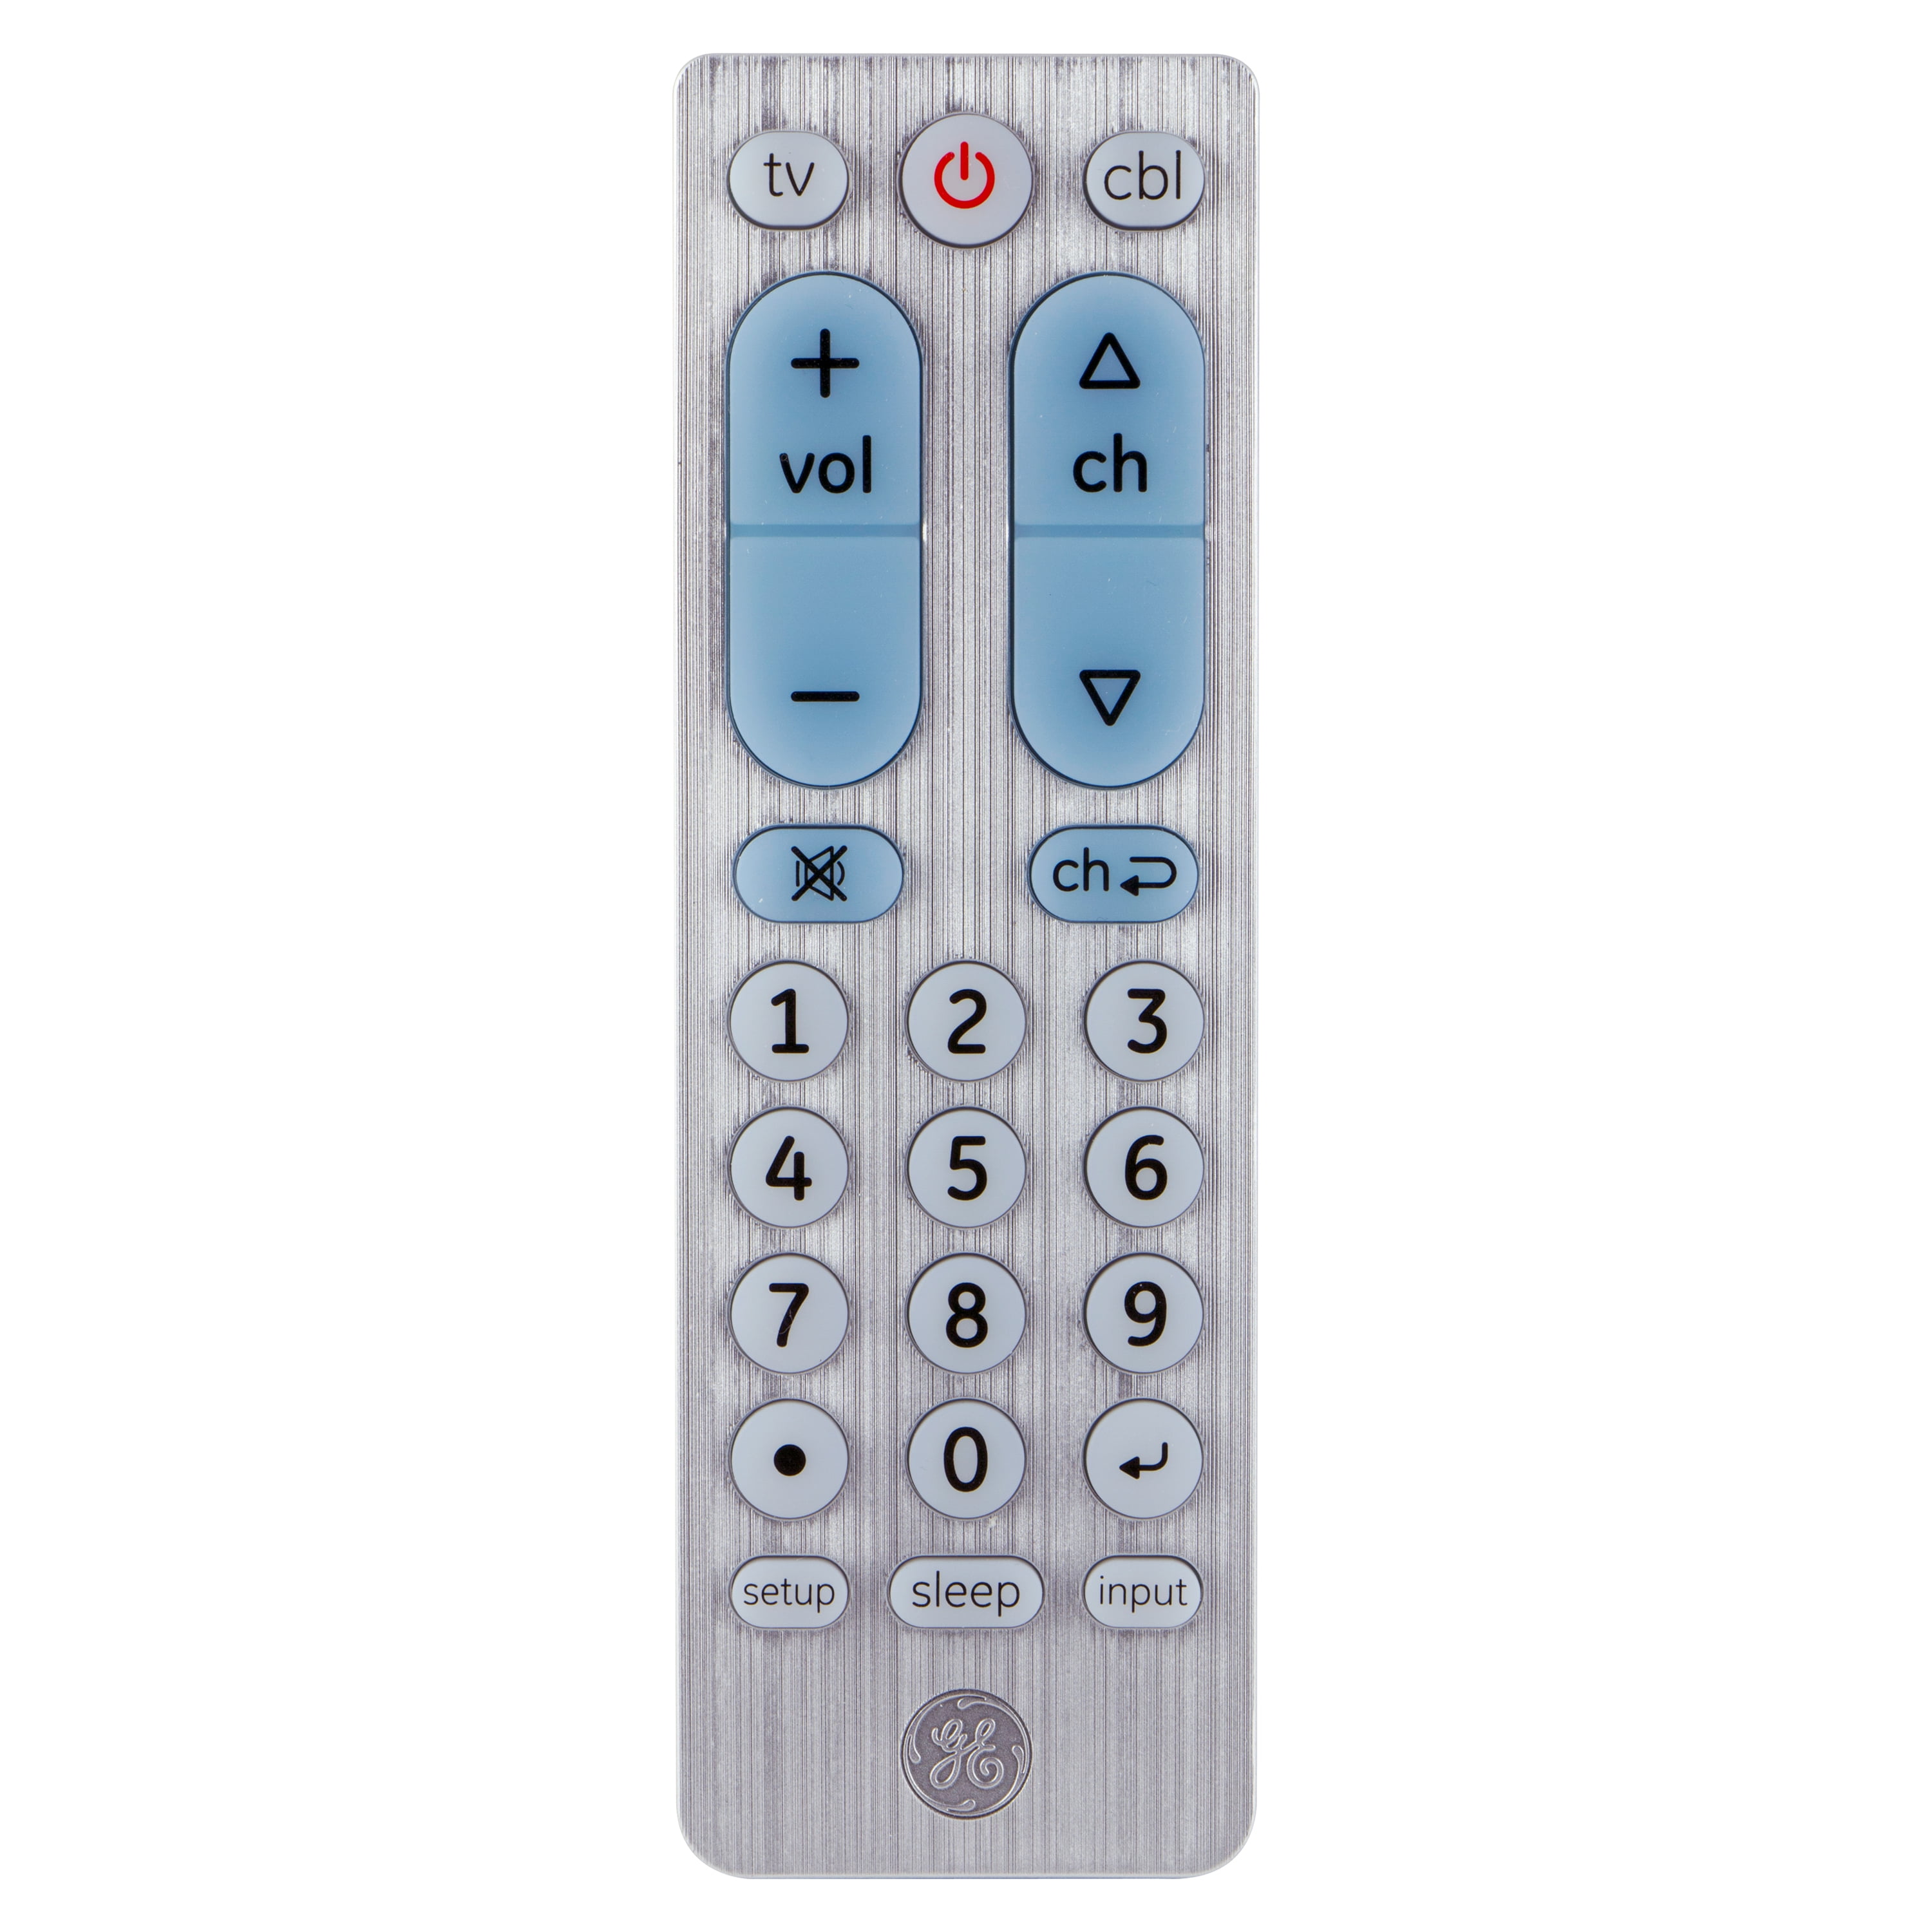 GE 2-Device Big Button Universal TV Remote Control in Silver, 69882